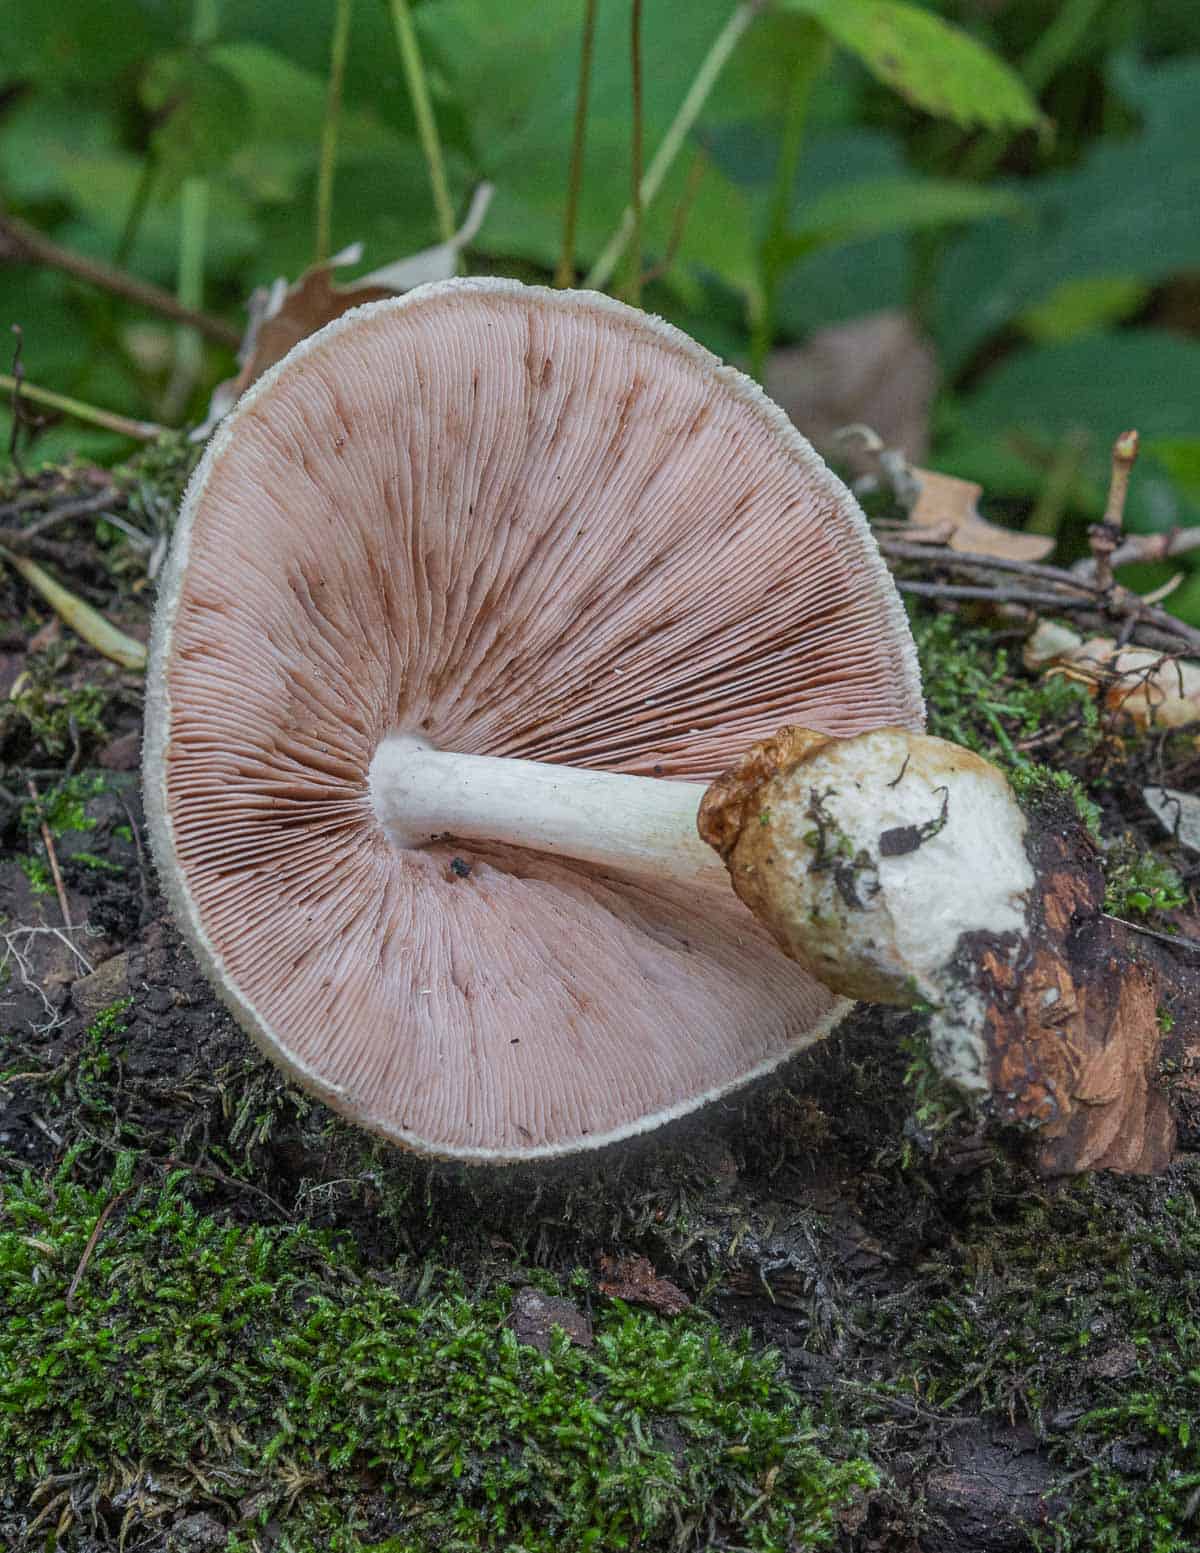 A close up image of a Volvariella mushroom showing the volva and bright pink gills. 